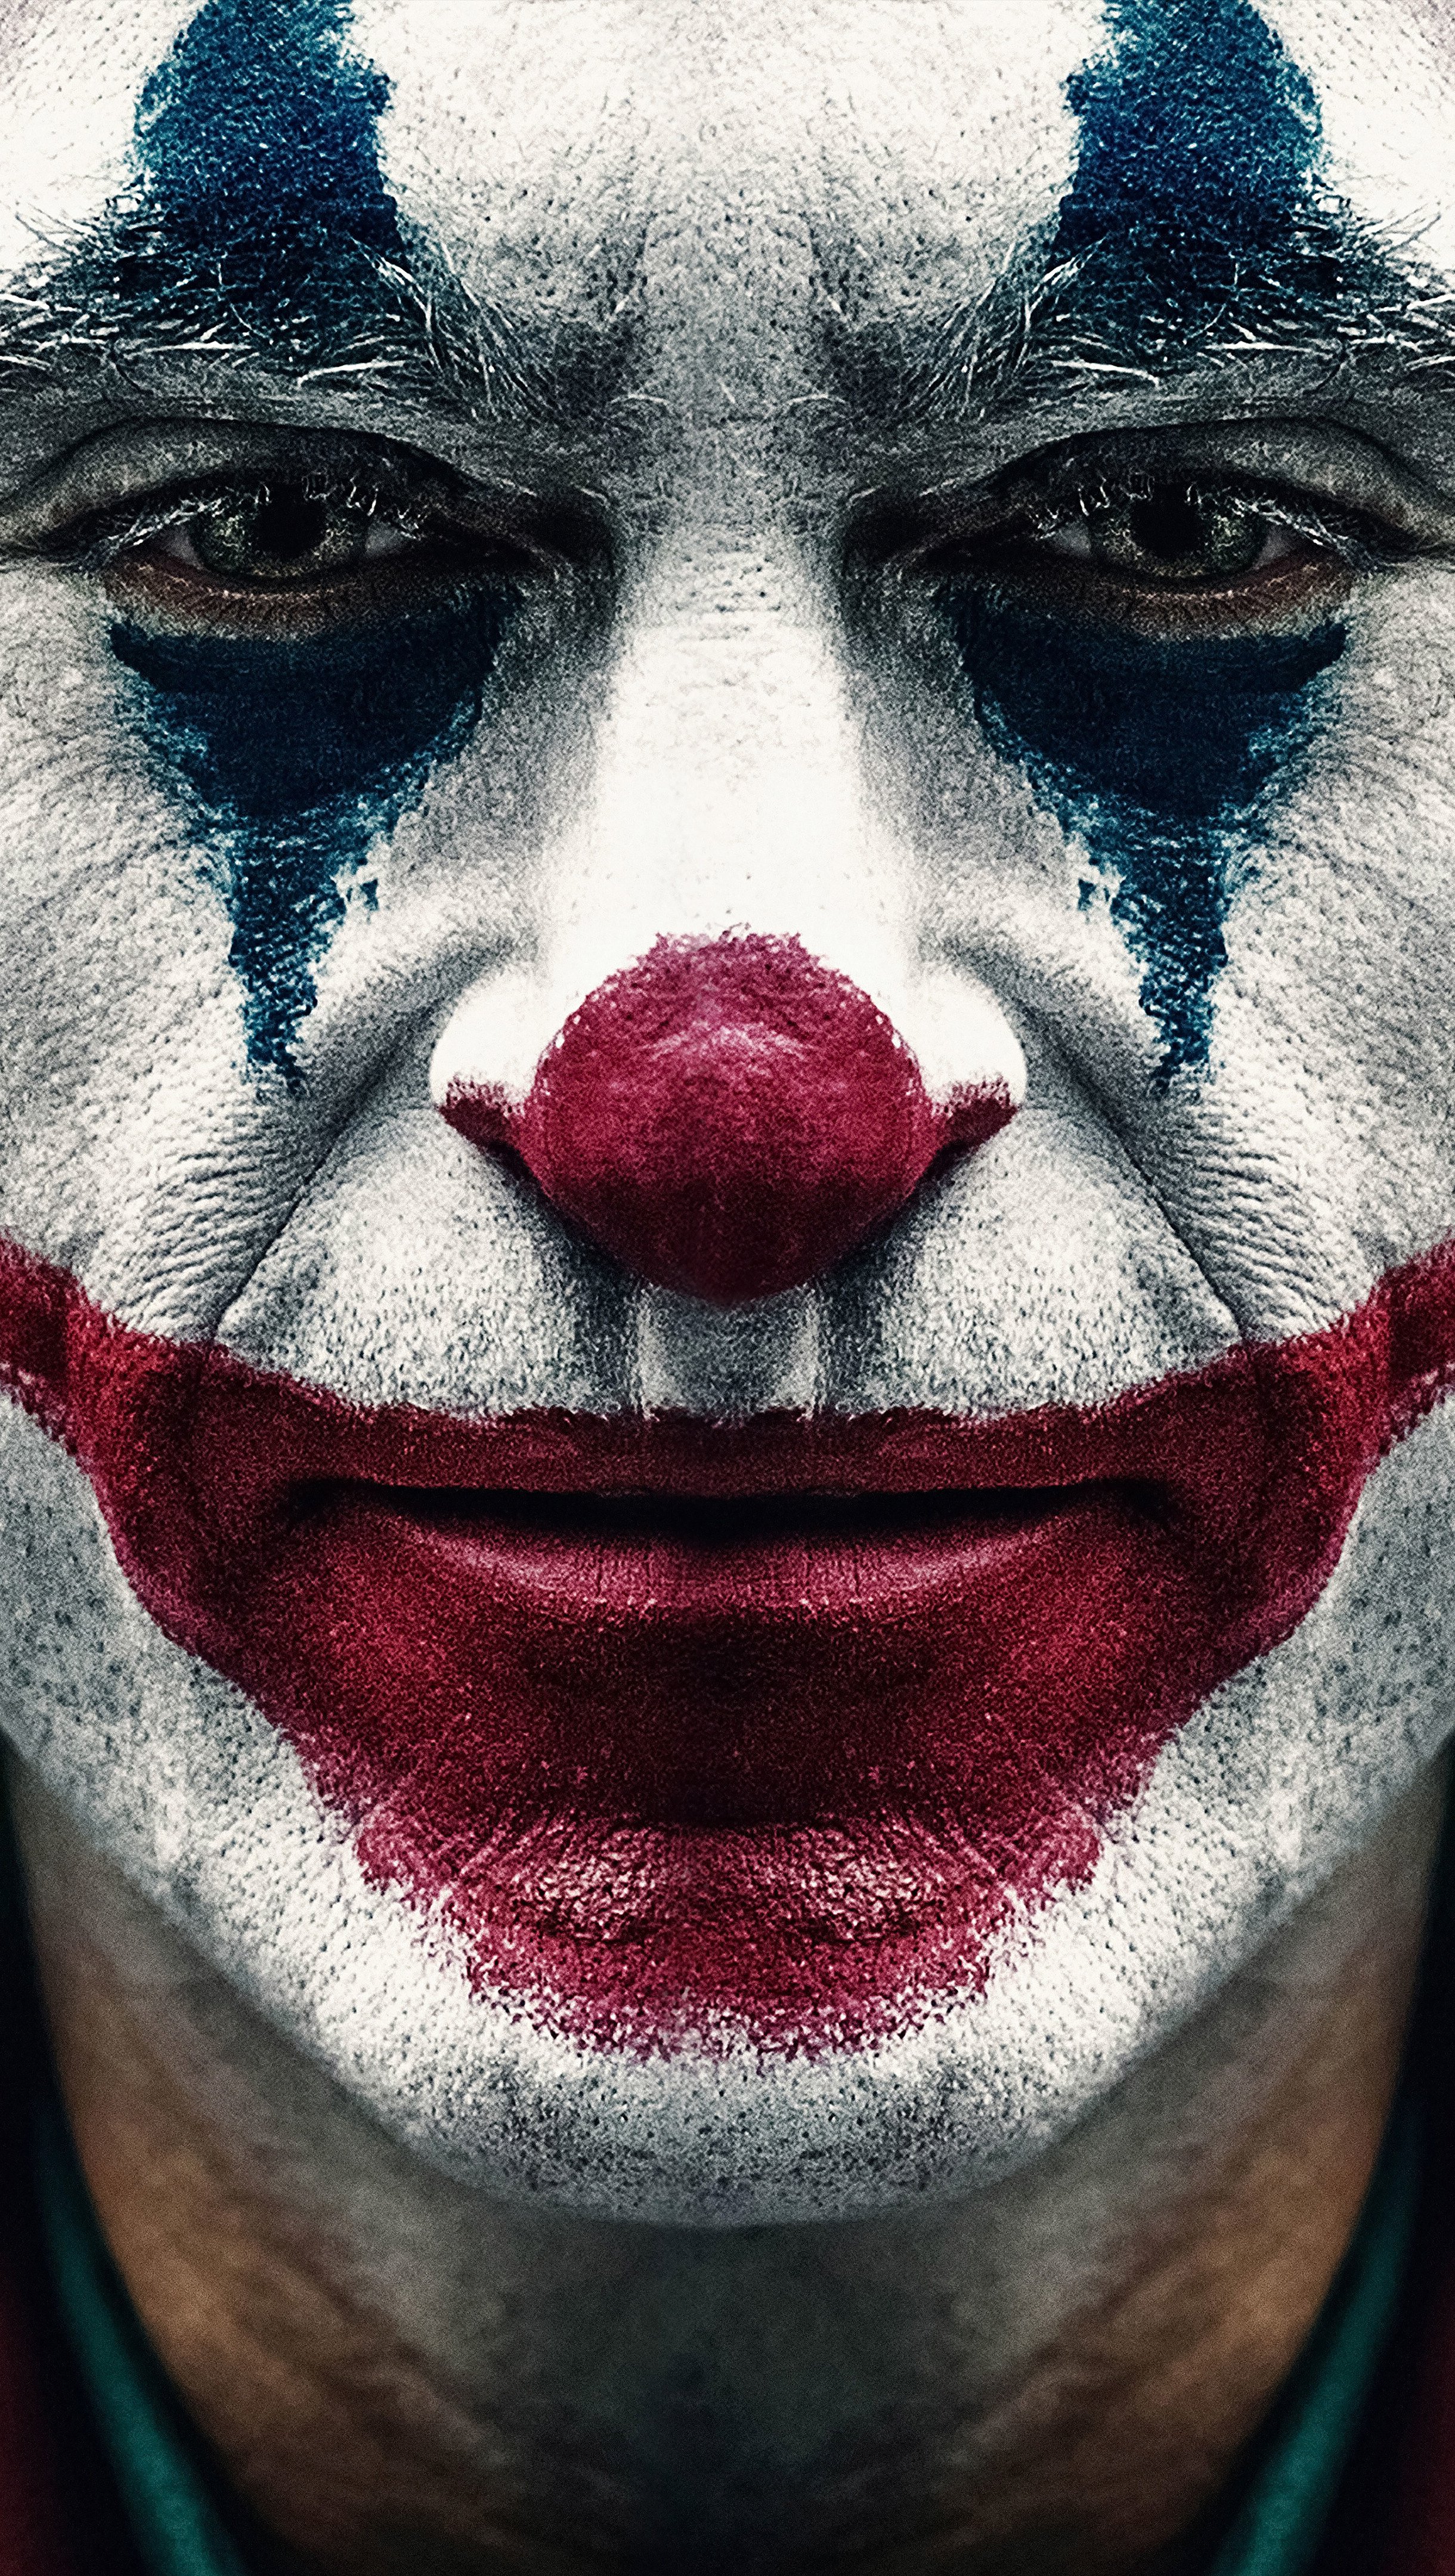 Joker Movie with Joaquin Phoenix Wallpaper 8k Ultra HD ID:3806